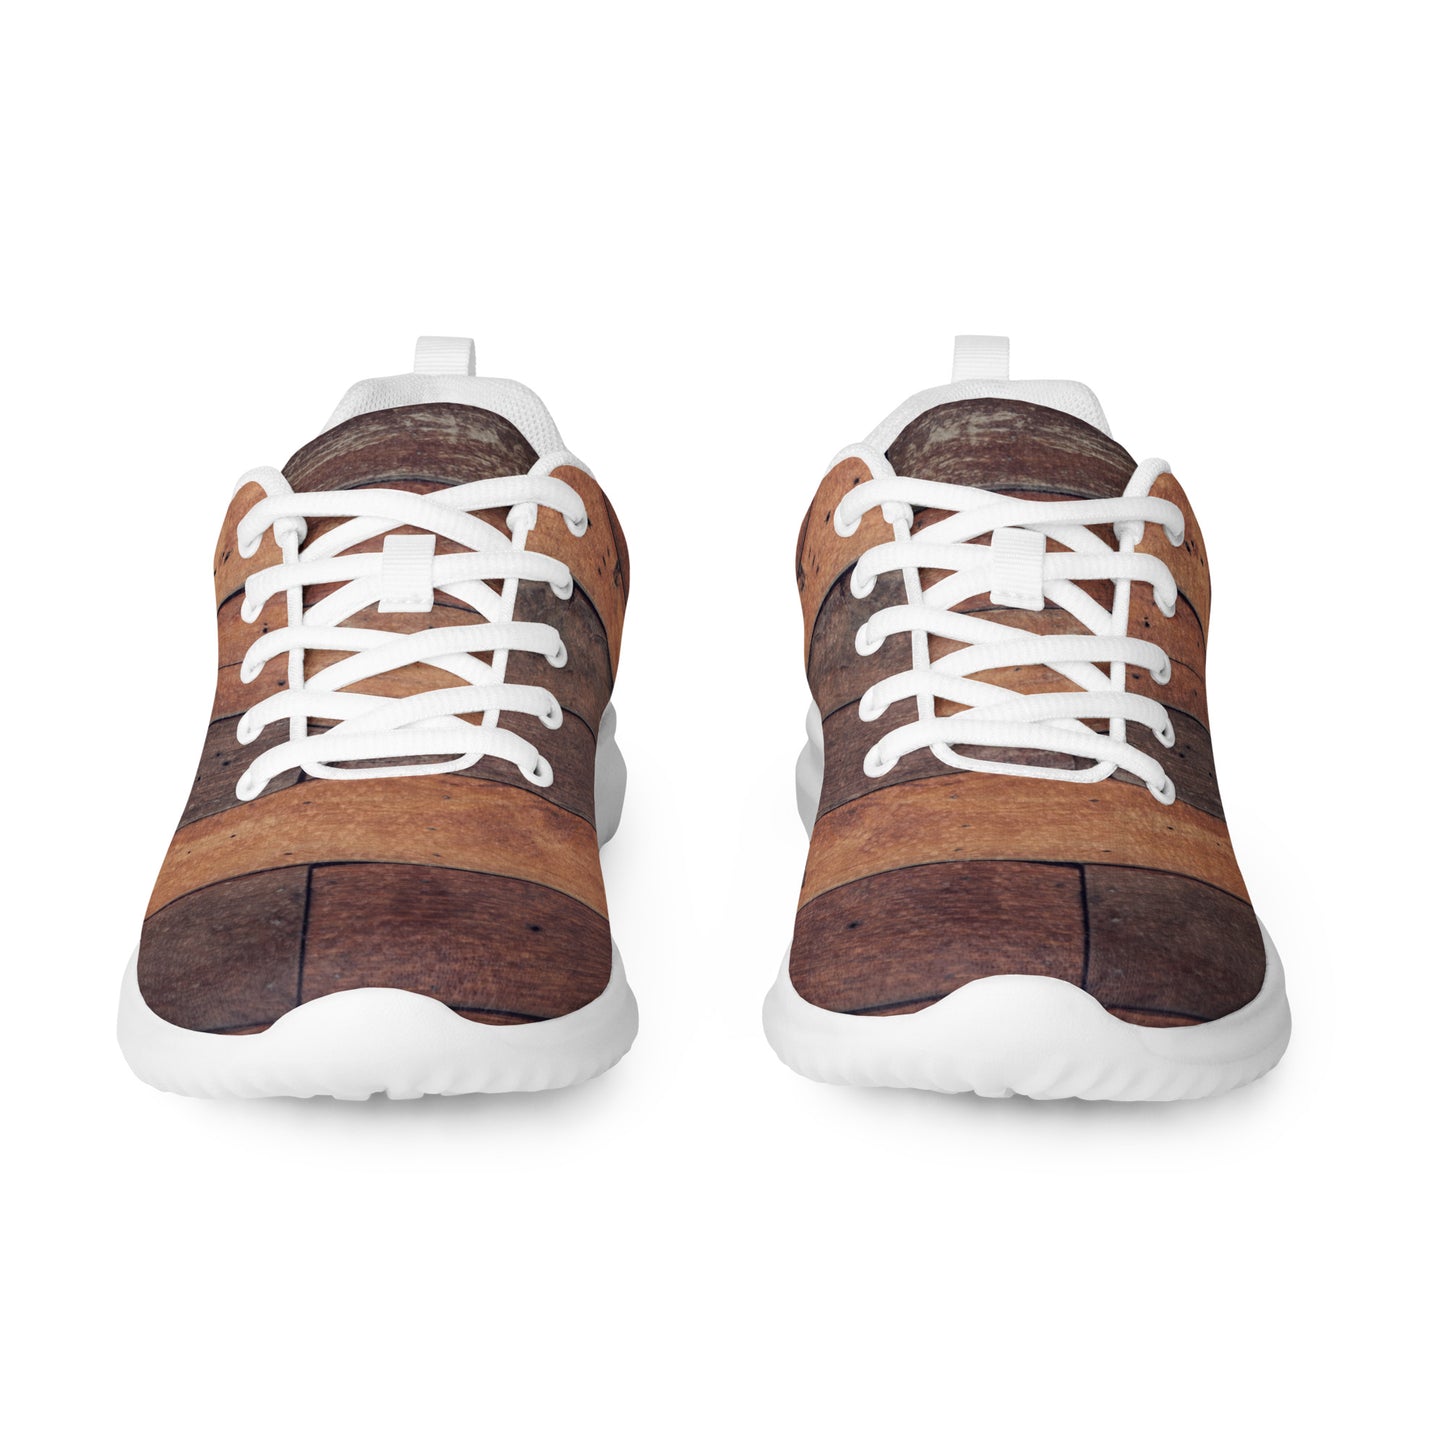 DASH Wooden Men’s Athletic Shoes Lightweight Breathable Design by IOBI Original Apparel